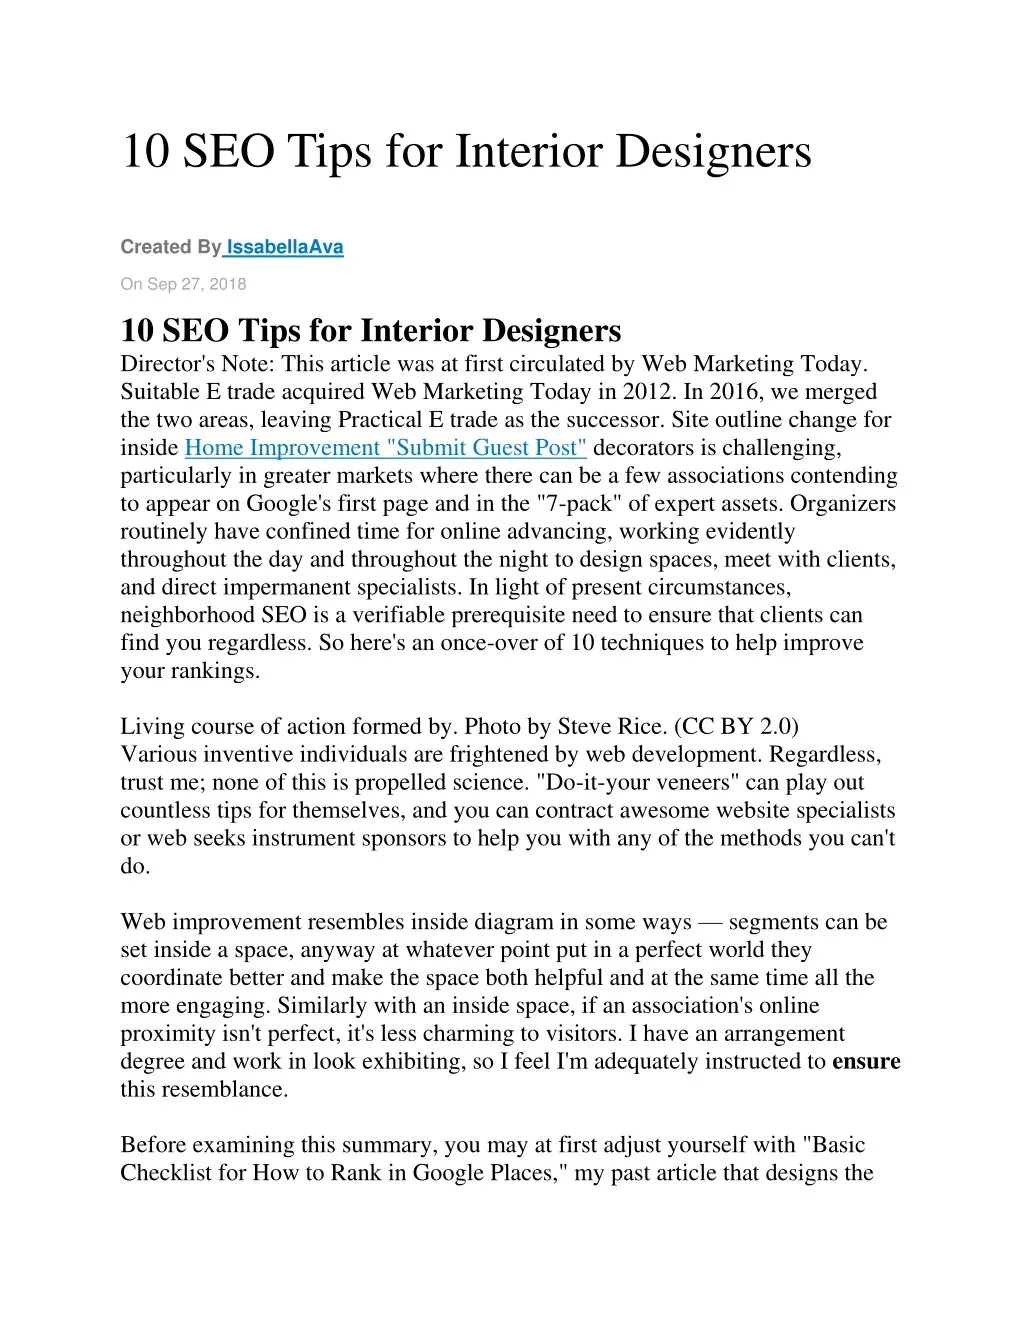 10 seo tips for interior designers